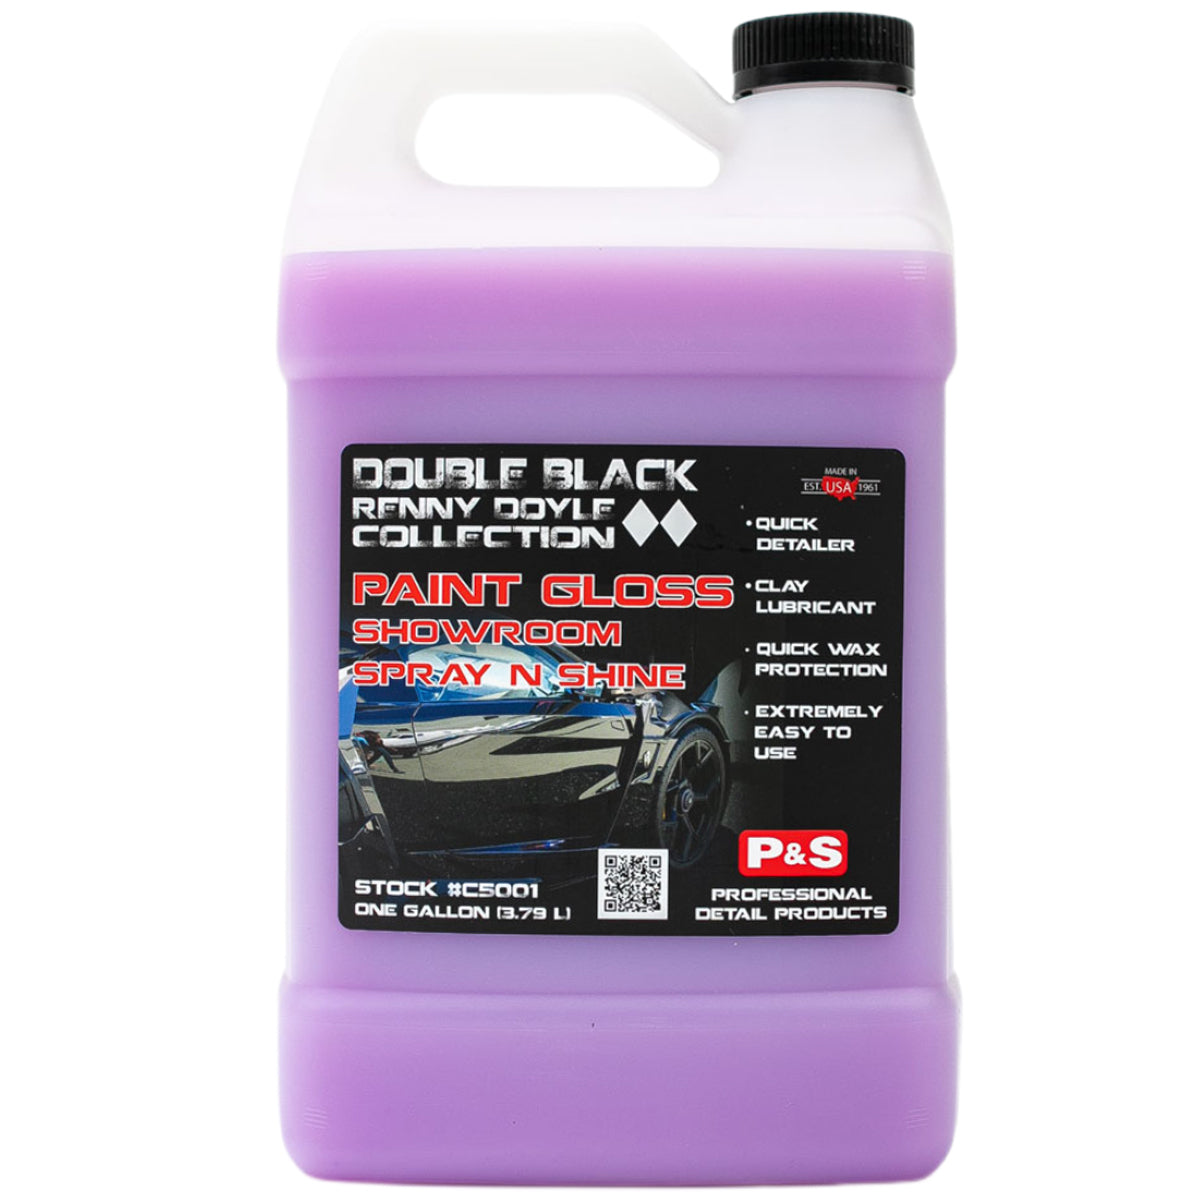 P&S Paint Gloss Showroom Spray n Shine